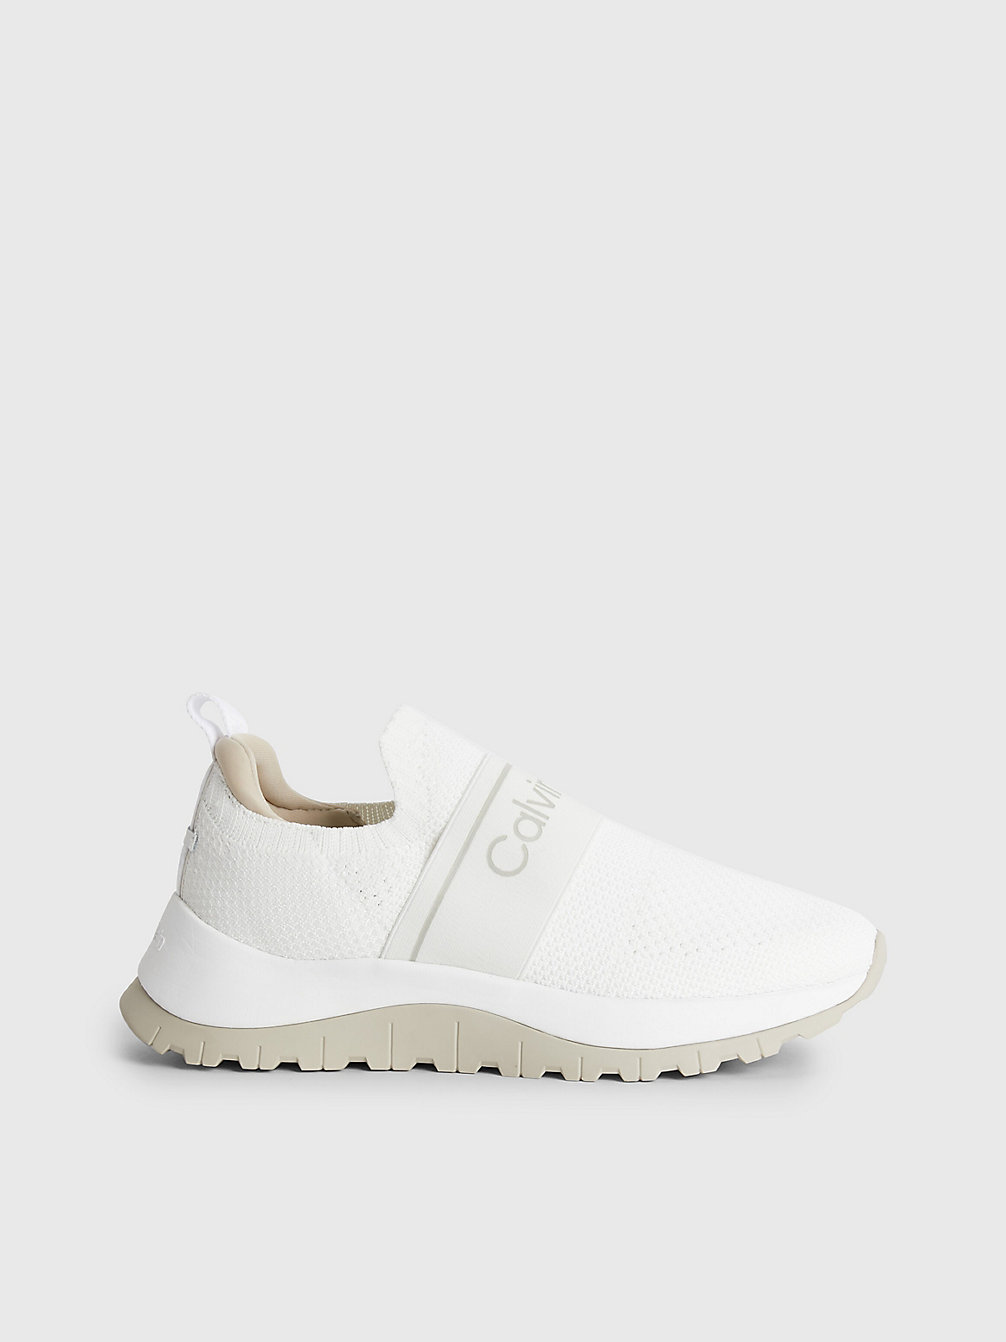 WHITE / DK ECRU Strick-Slip-On-Sneakers Aus Recyceltem Material undefined Damen Calvin Klein